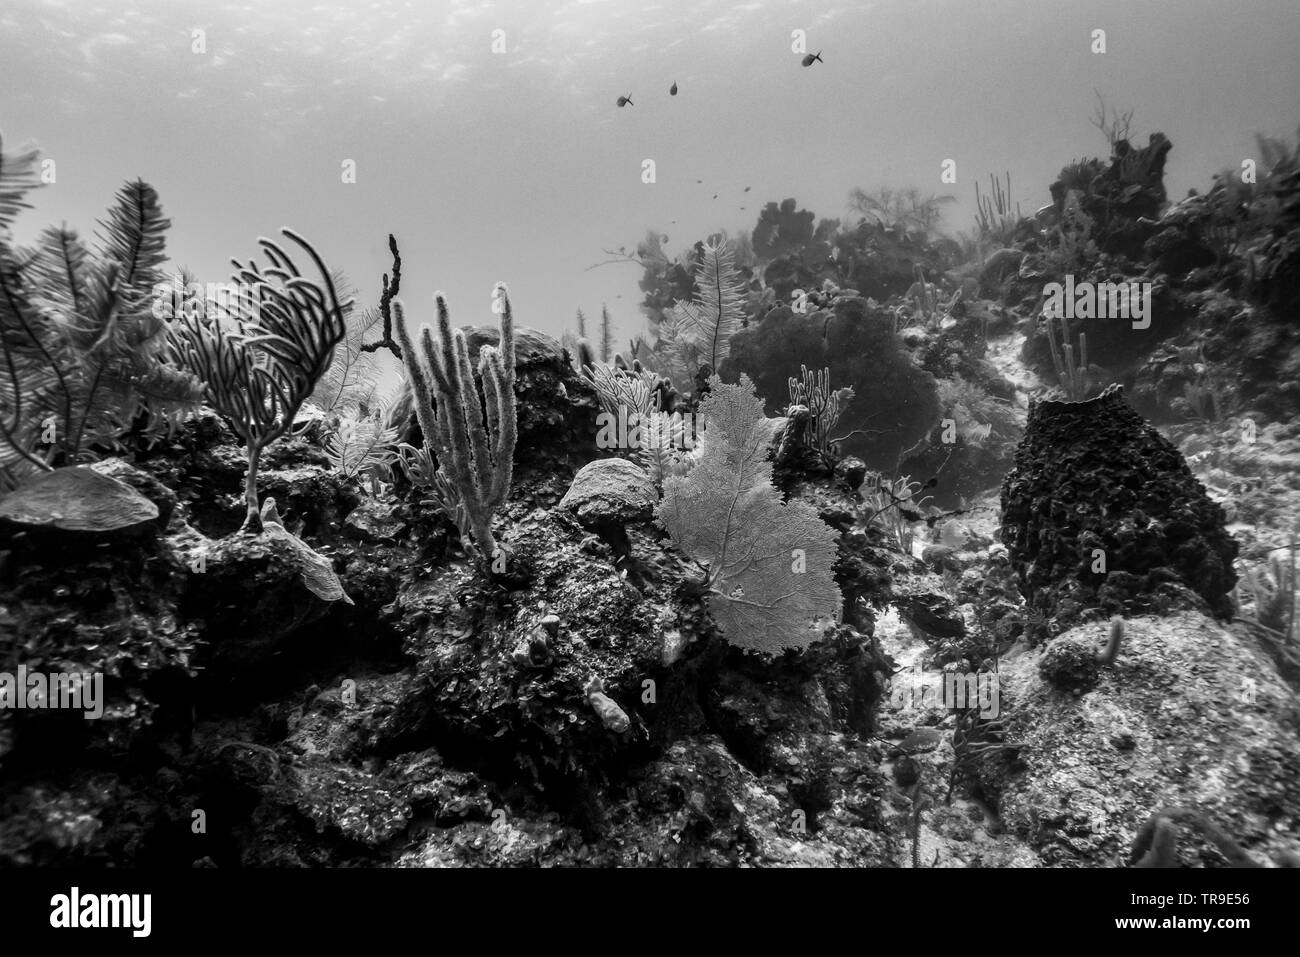 Coral reefs underwater, Belize Stock Photo - Alamy